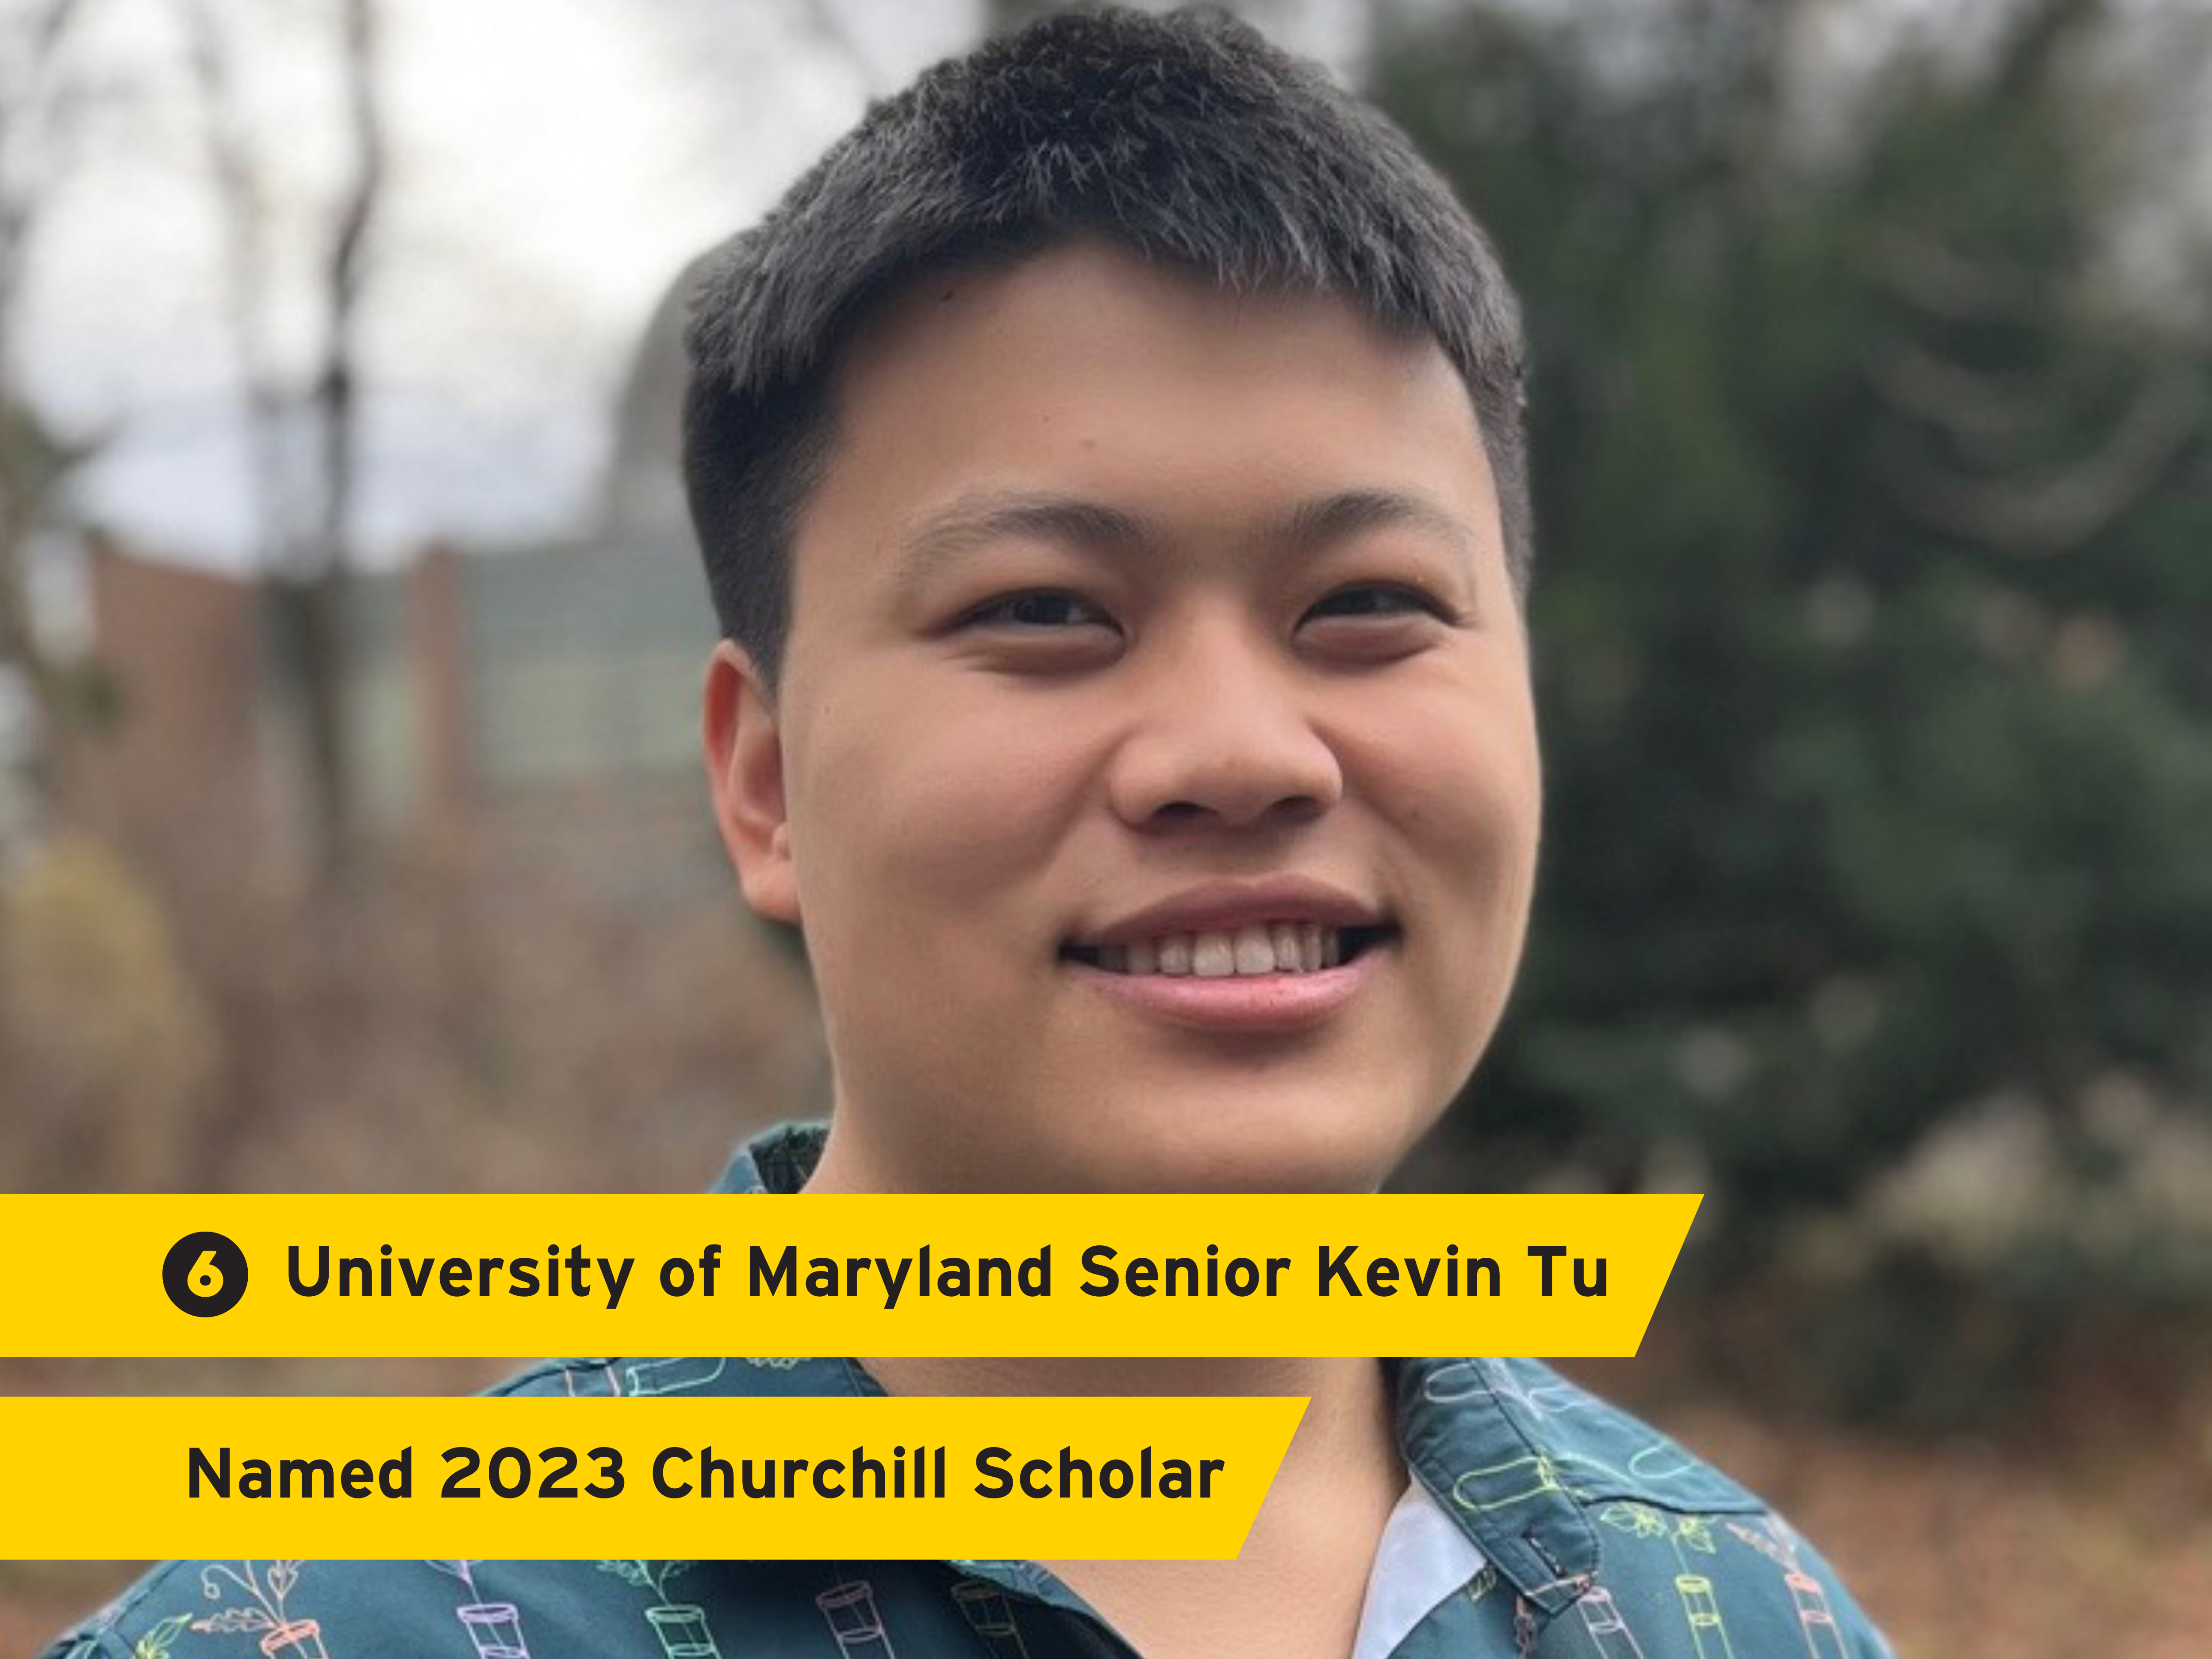 "University of Maryland Senior Kevin Tu Named 2023 Churchill Scholar" over a background of Kevin Tu's headshot